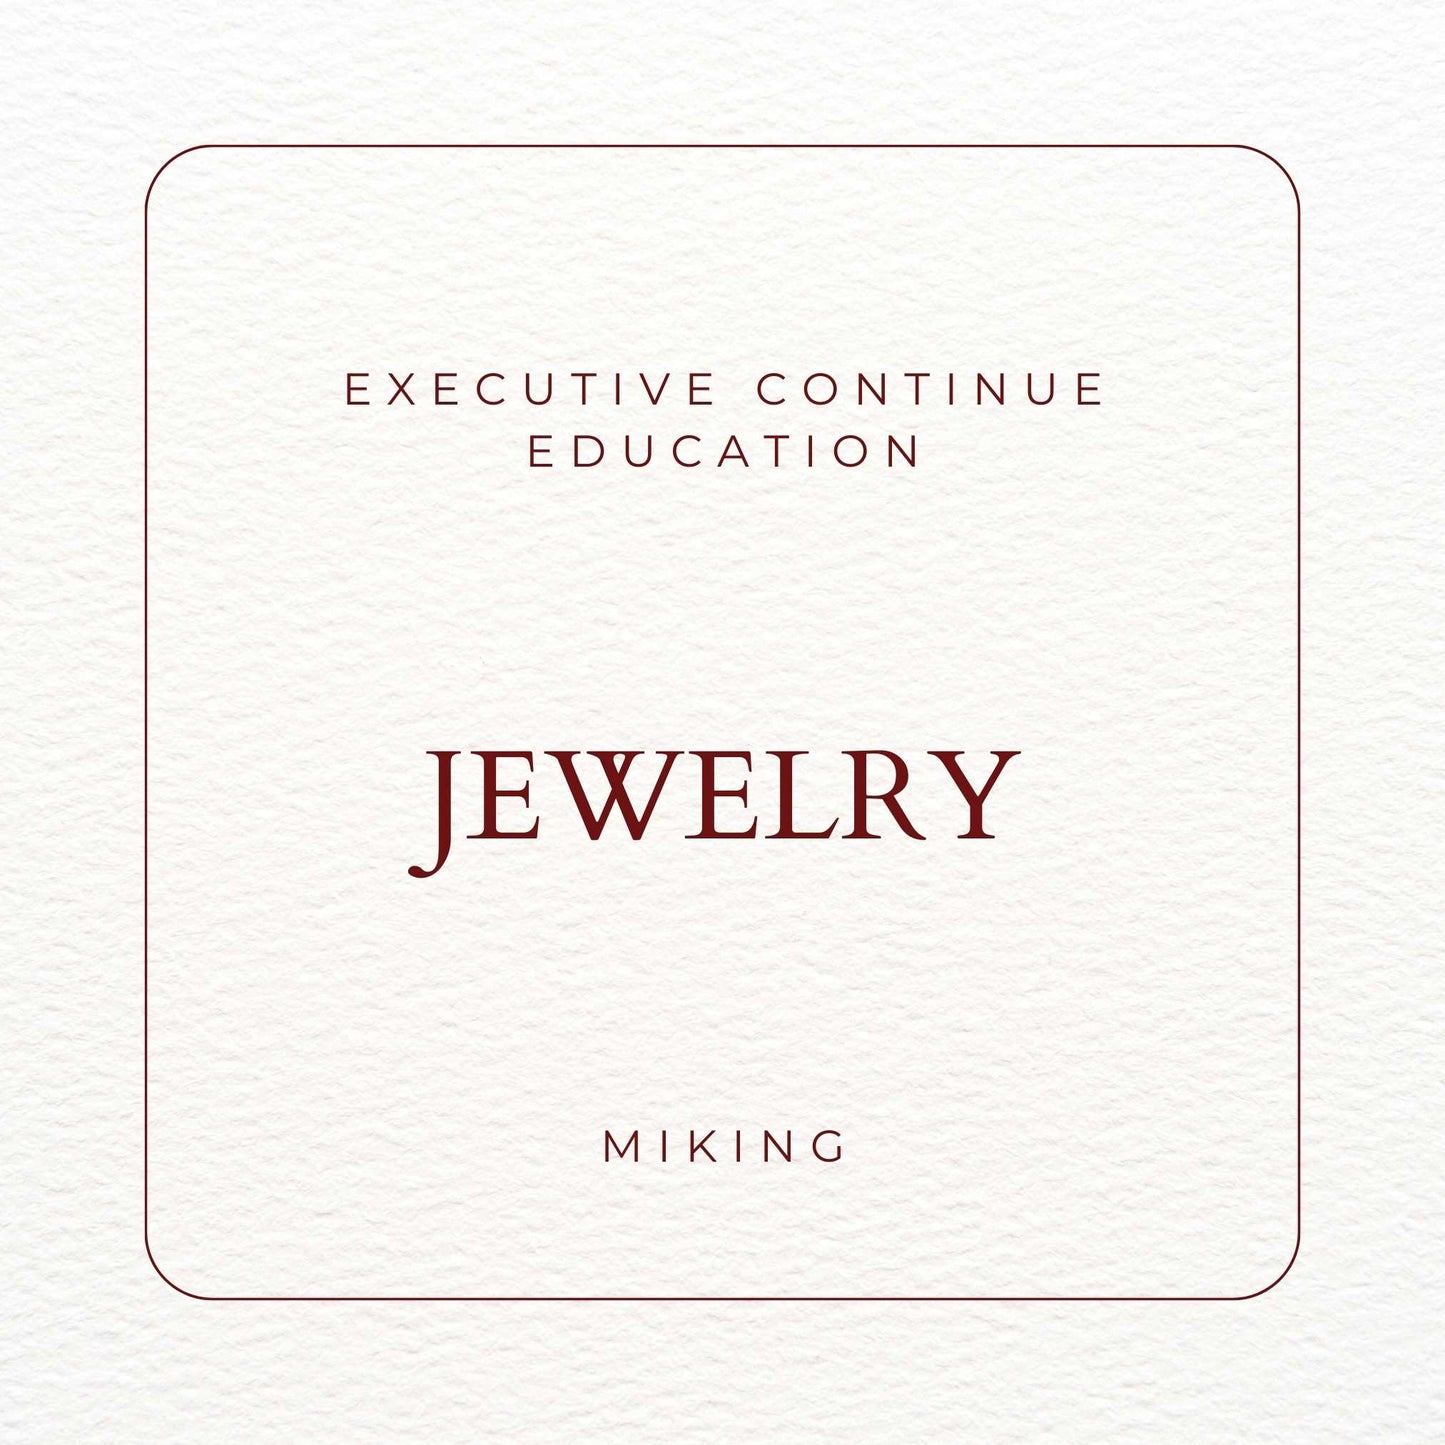 Executive Continue Education Jewelry